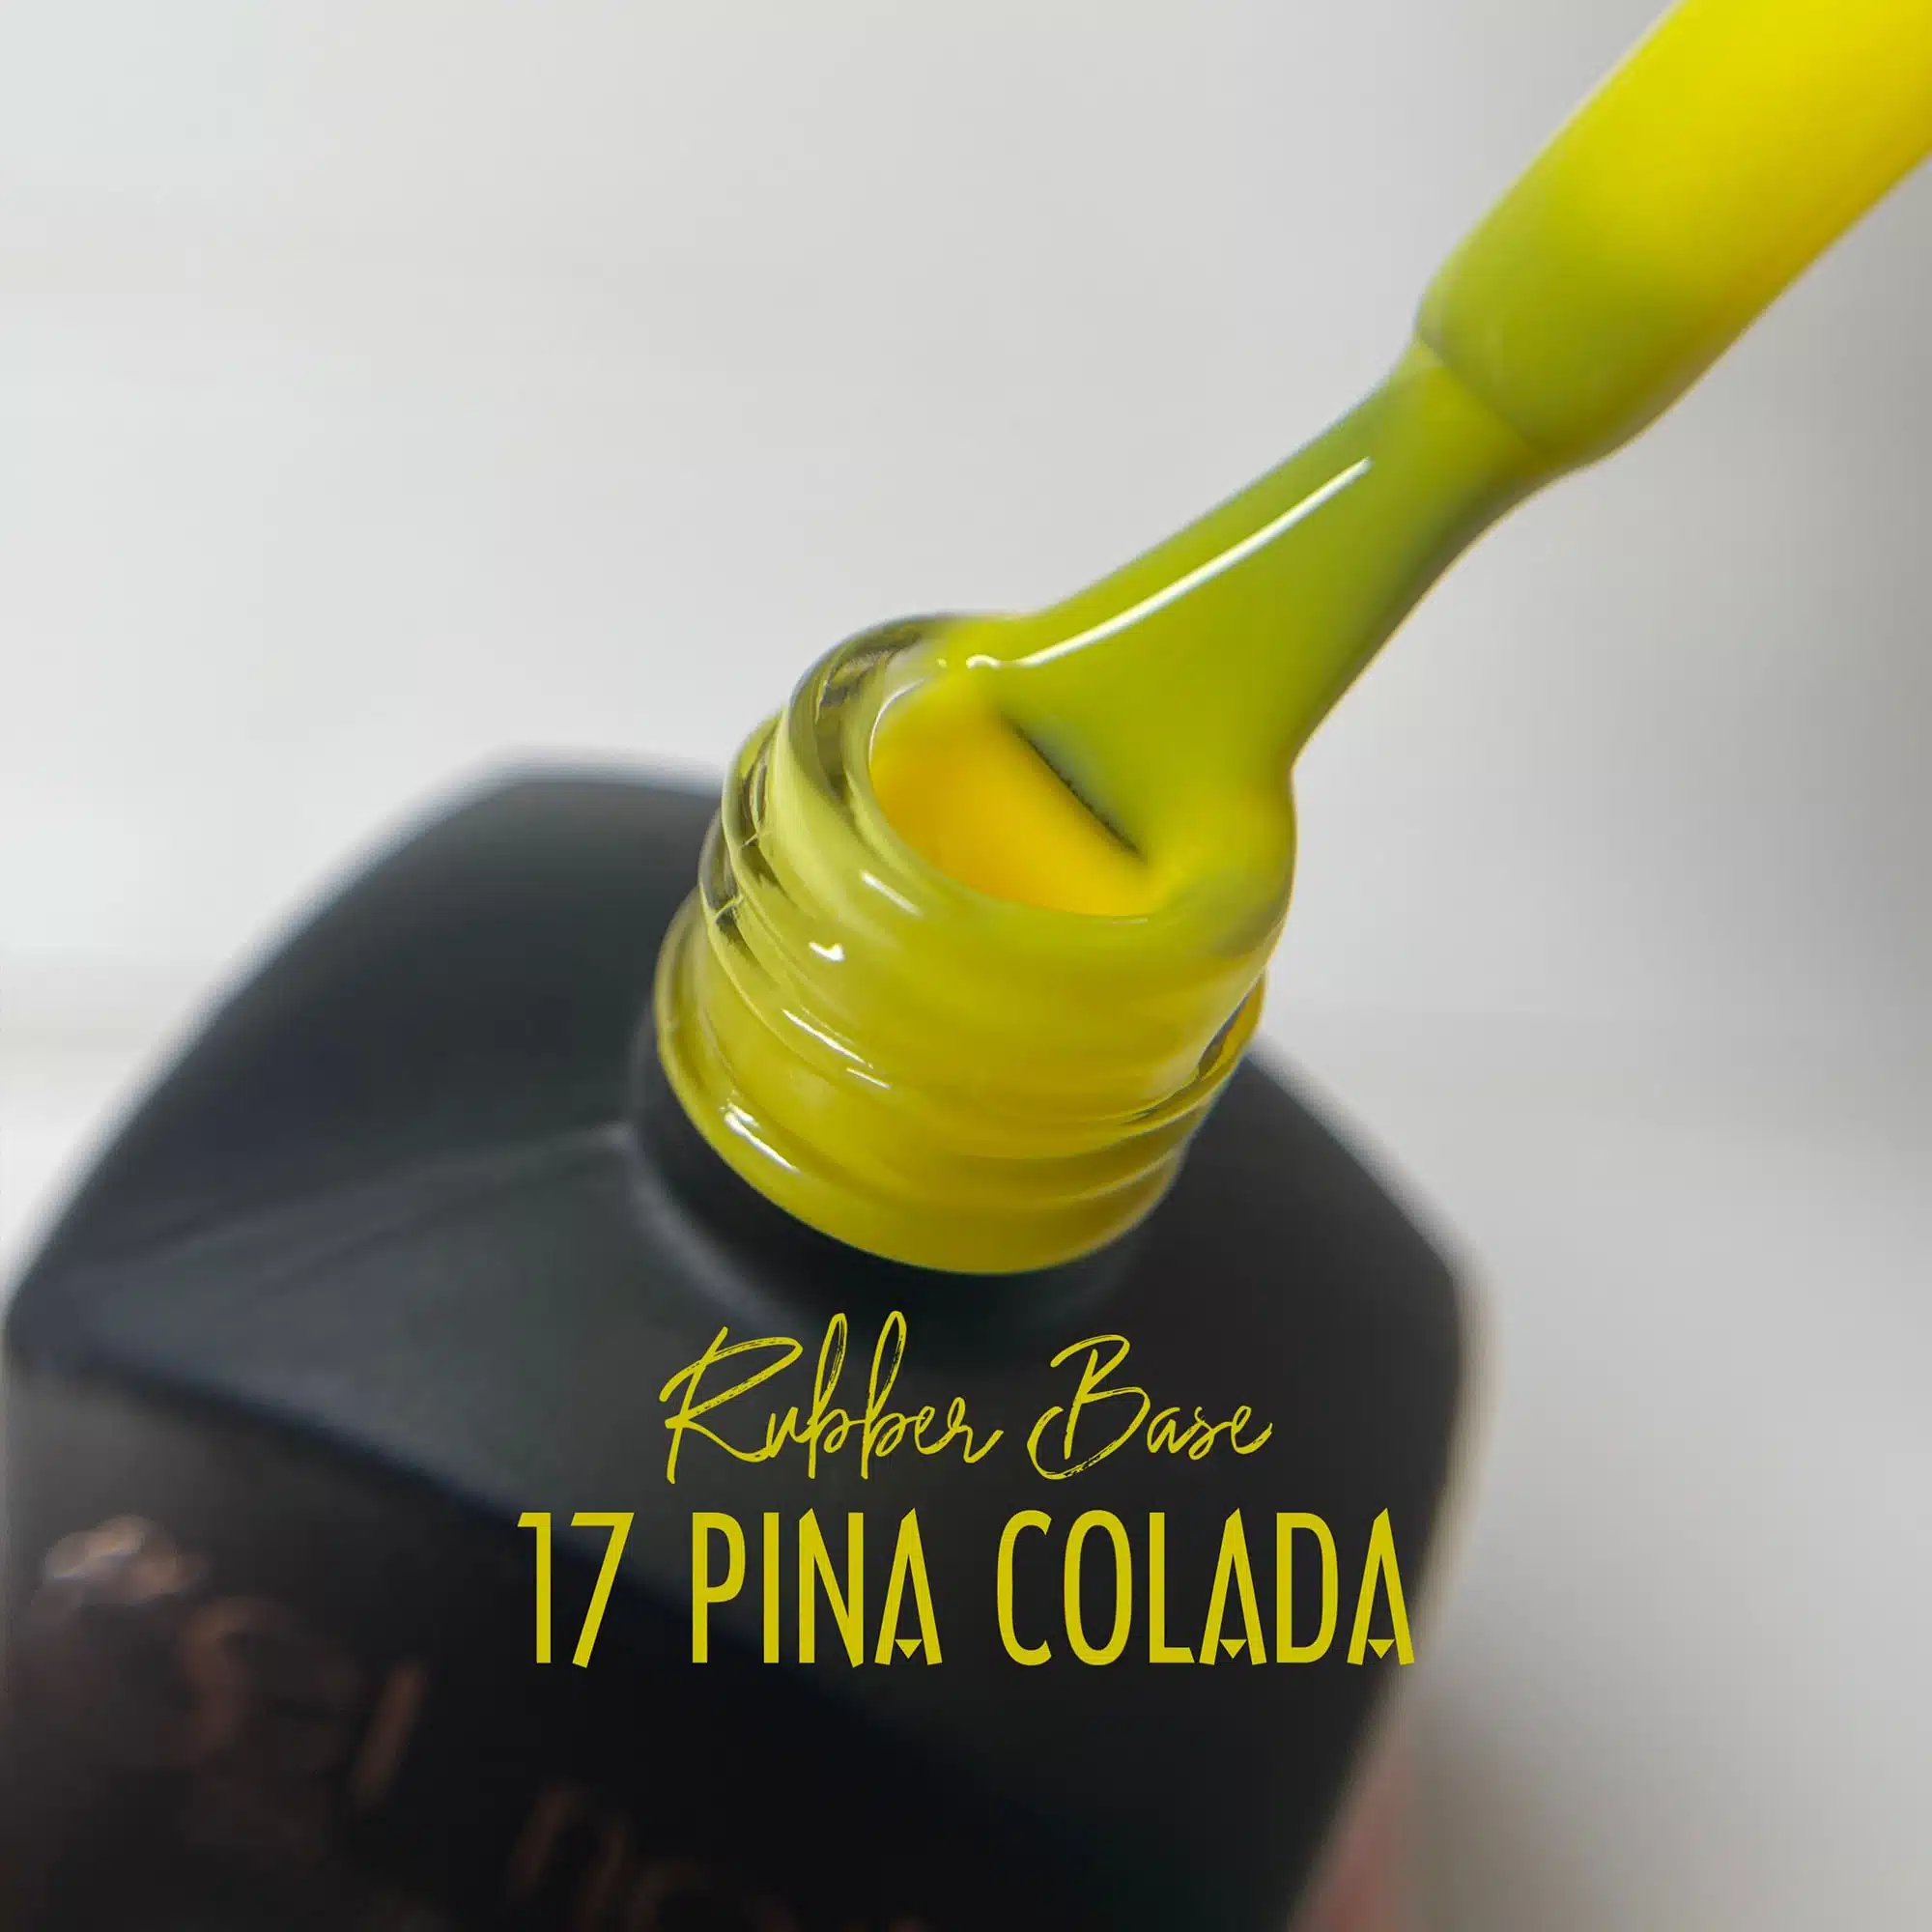 Get Nails Austria - GetLac Rubber Base 17 Pina Colada 15g